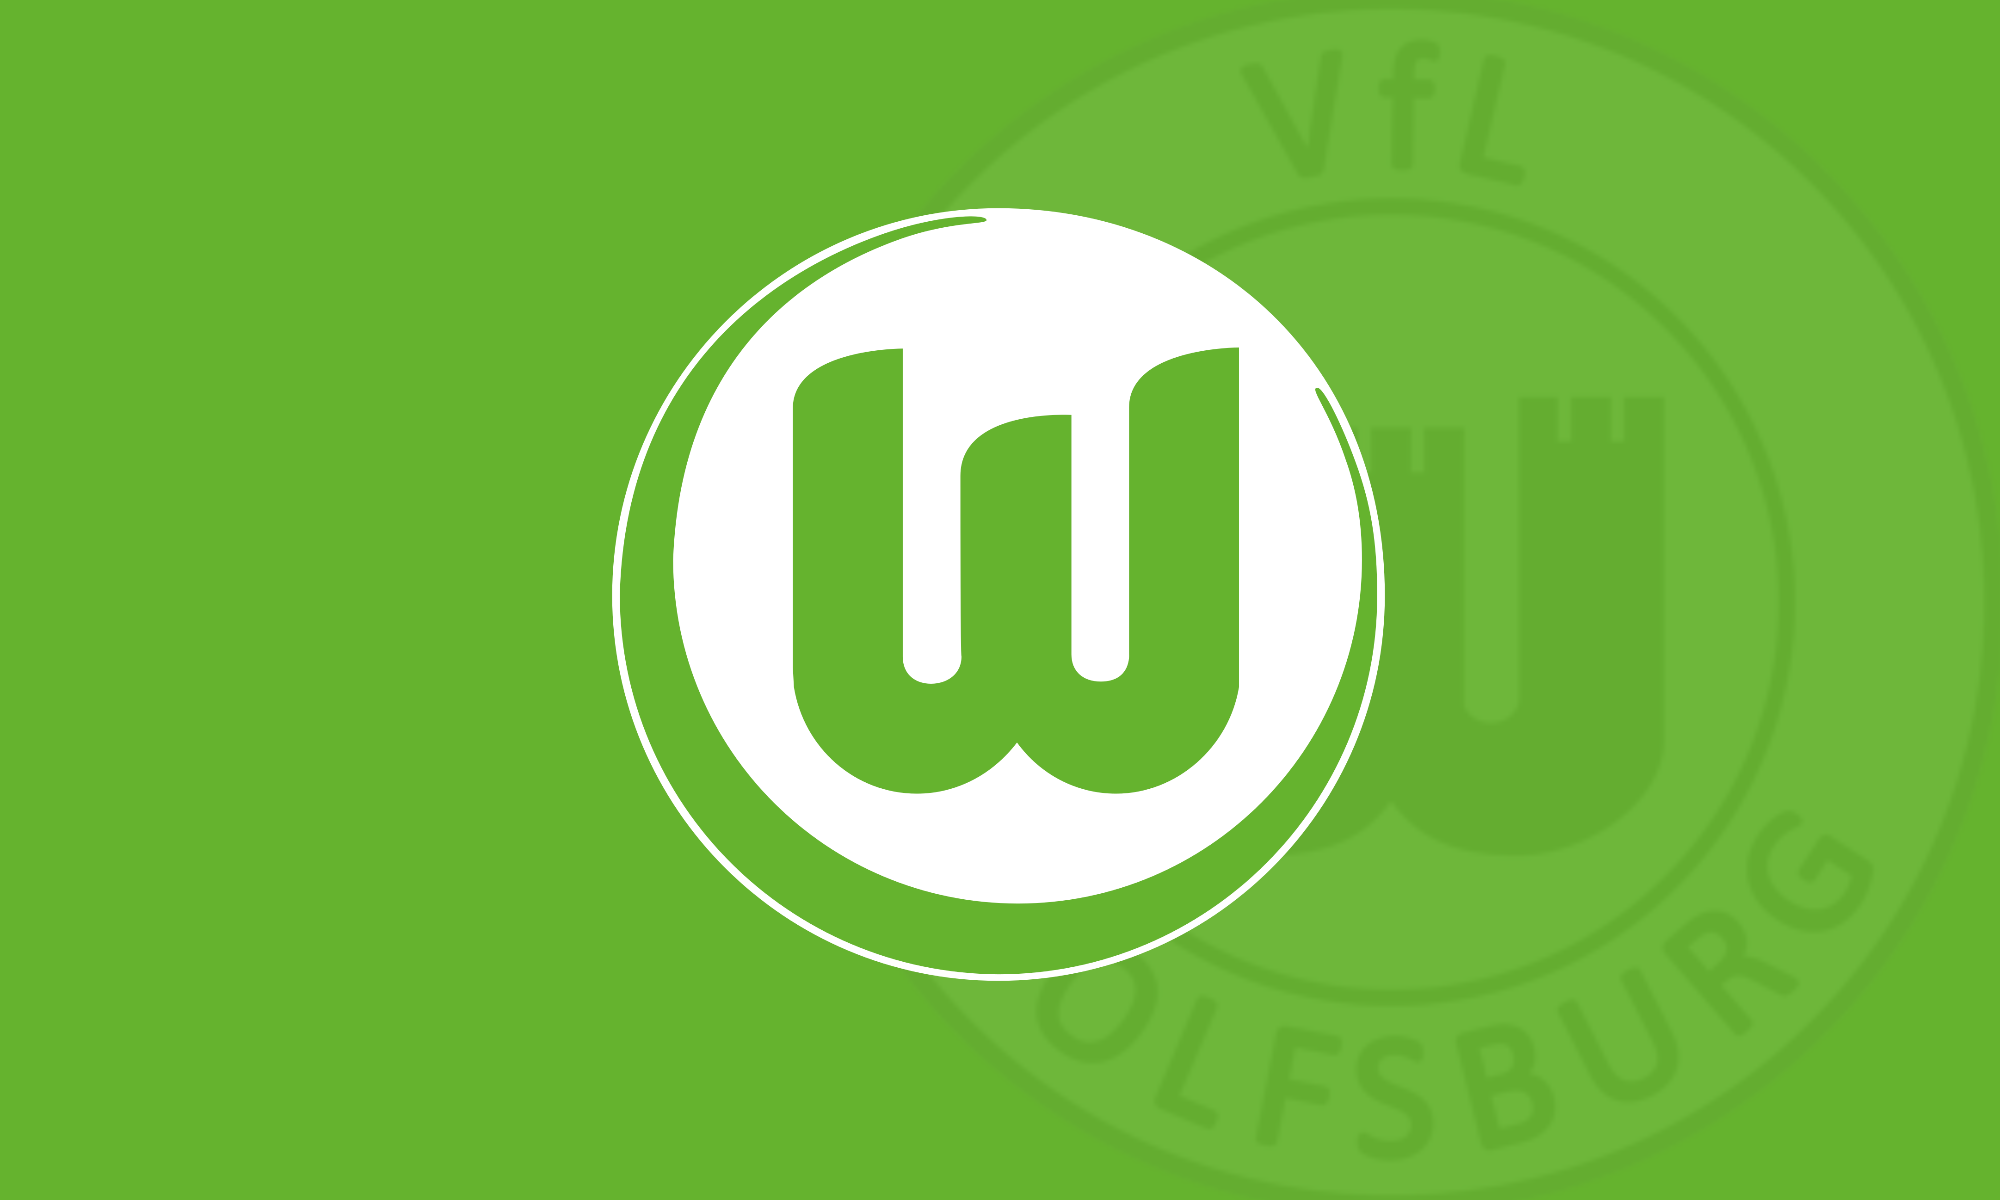 Vfl Wolfsburg Wallpaper Including Retro Badge Oc Diewolfe